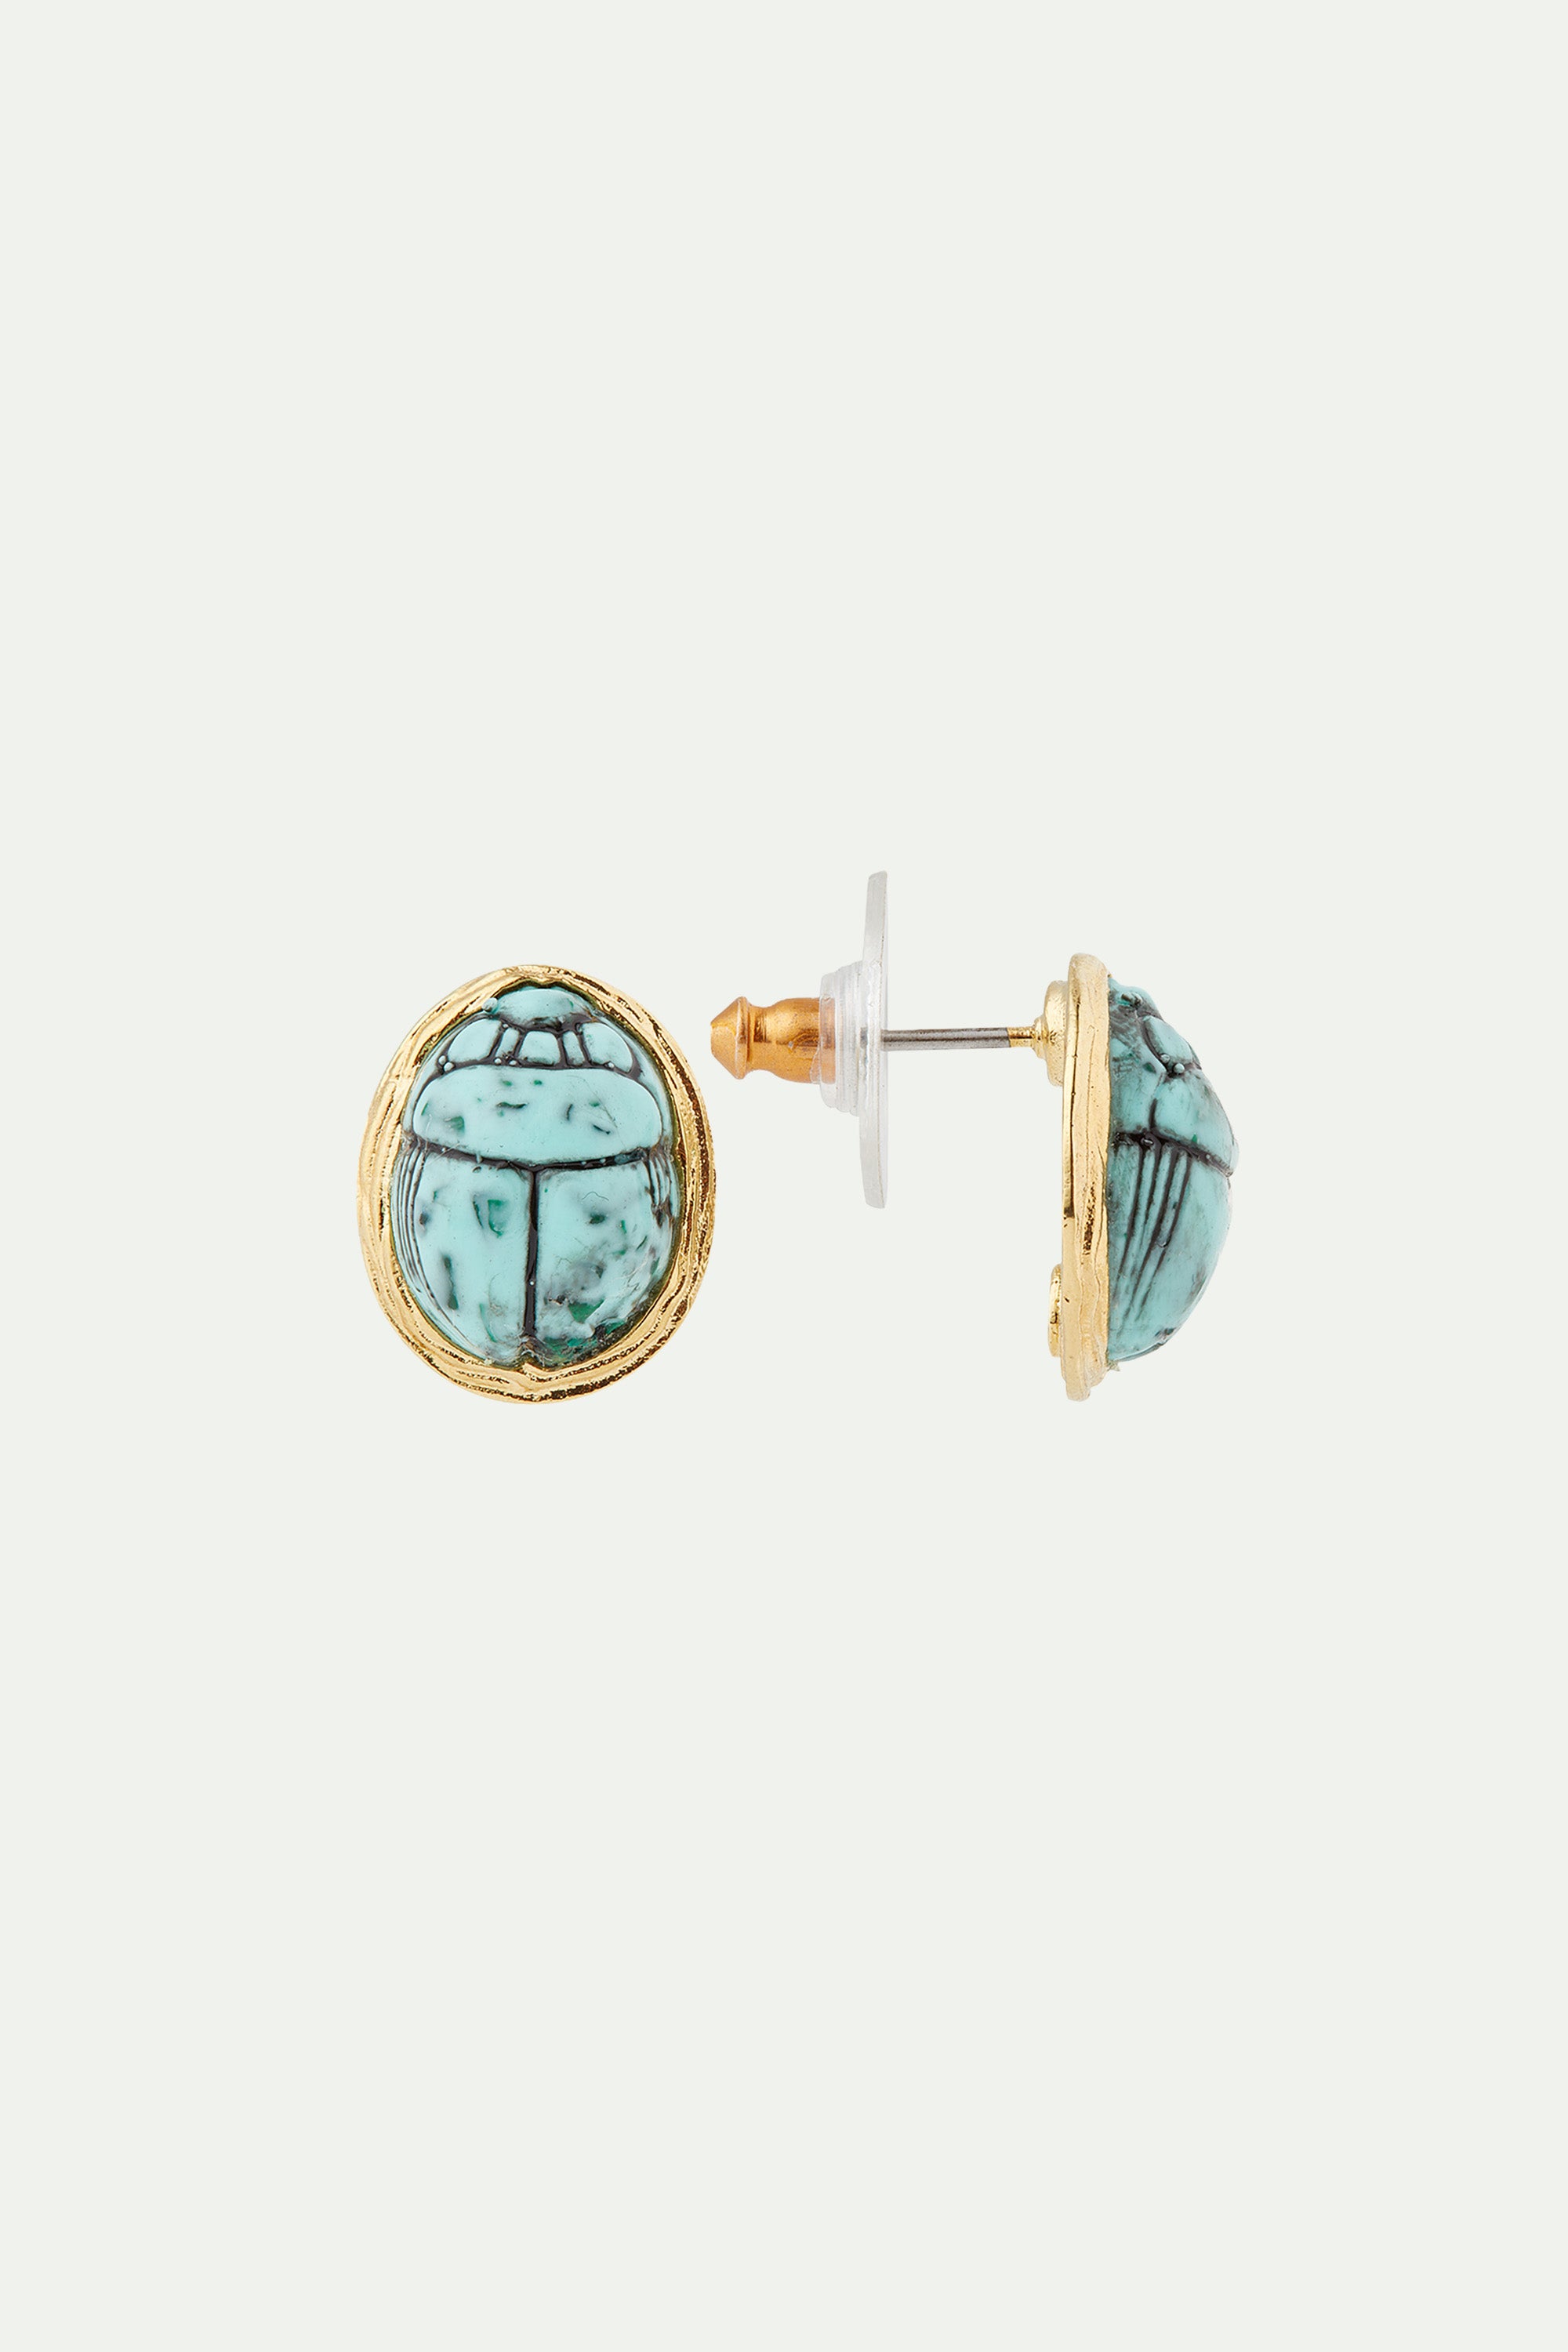 Turquoise scarab beetle clip-on earrings